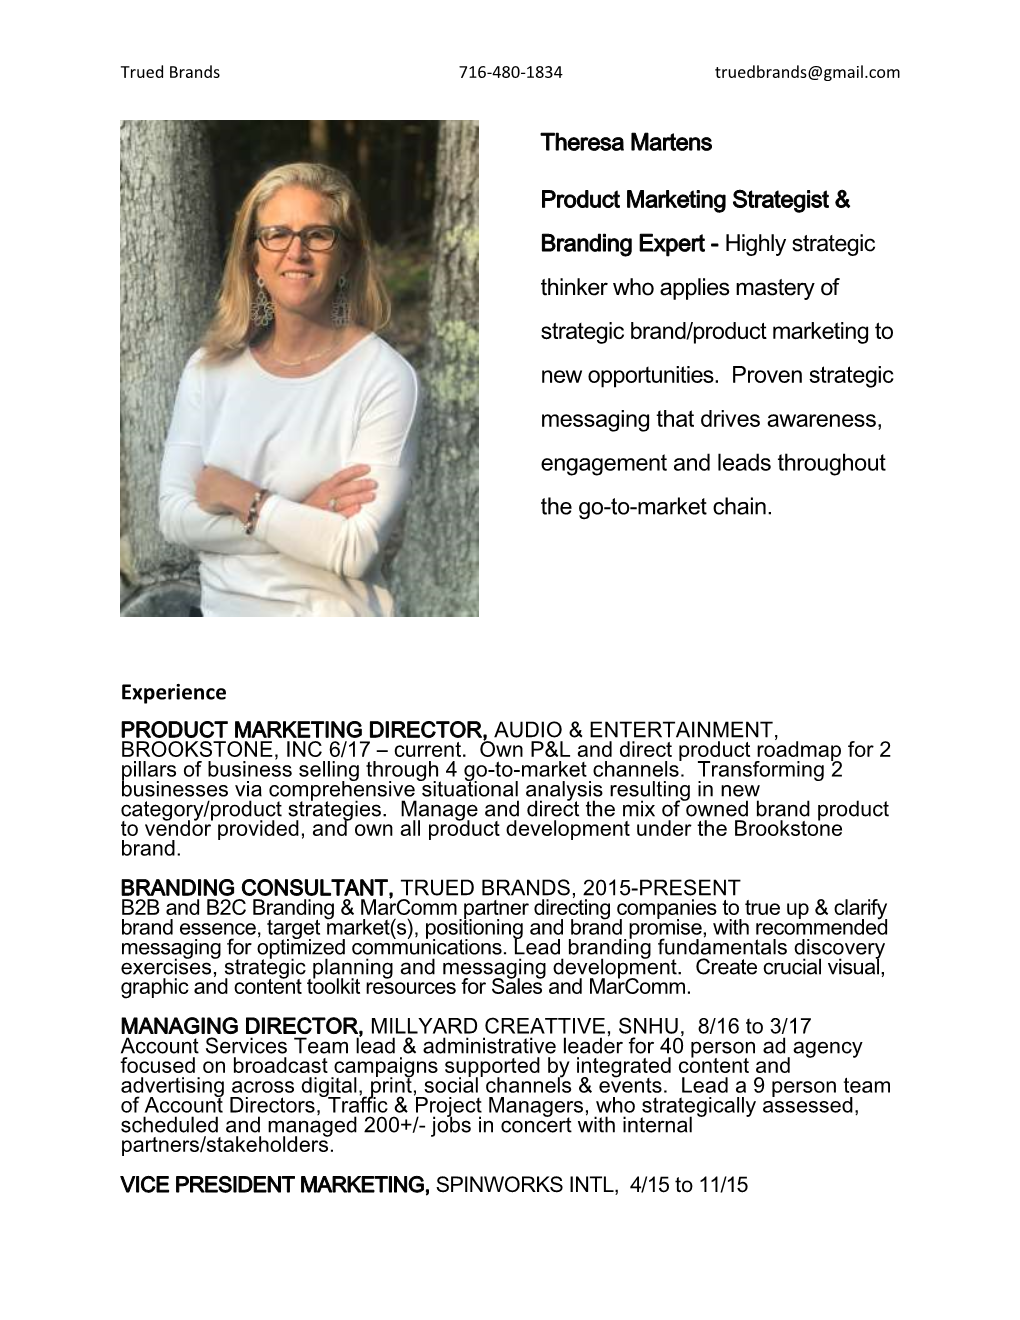 Theresa Martens Product Marketing Strategist & Branding Expert